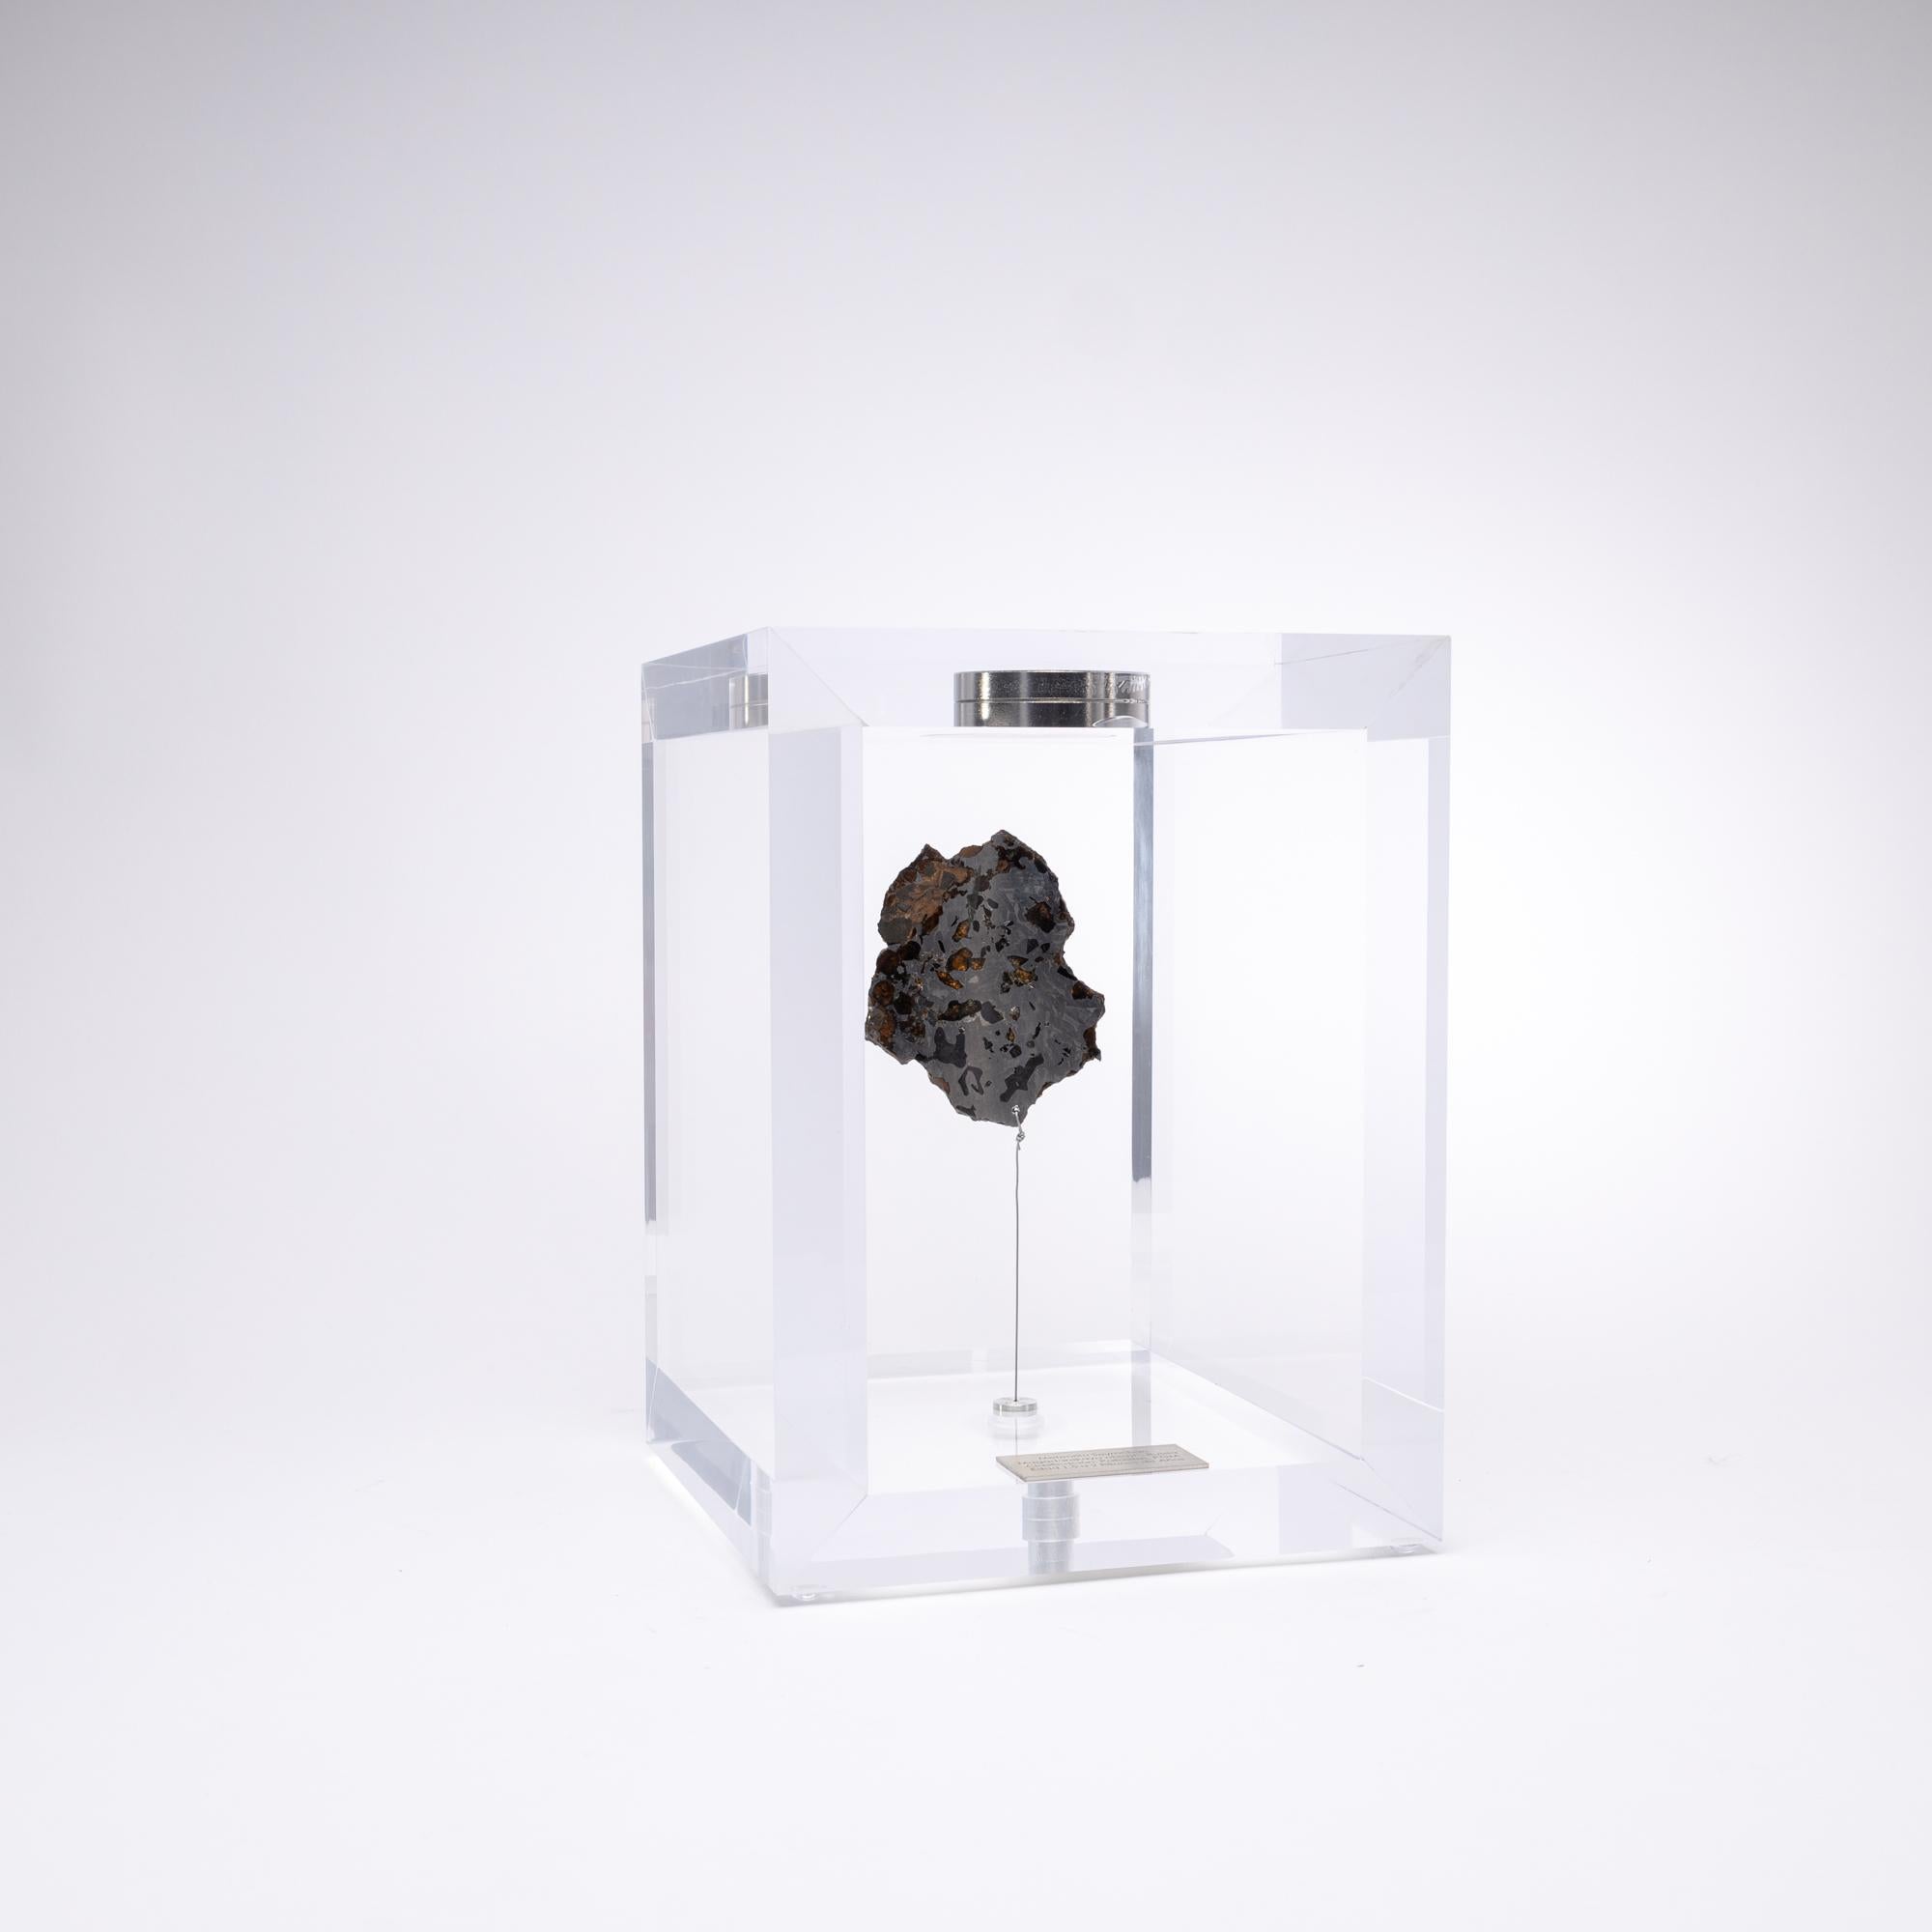 Organic Modern Original Design, Space Box, Russian Seymchan with Olivine Meteorite